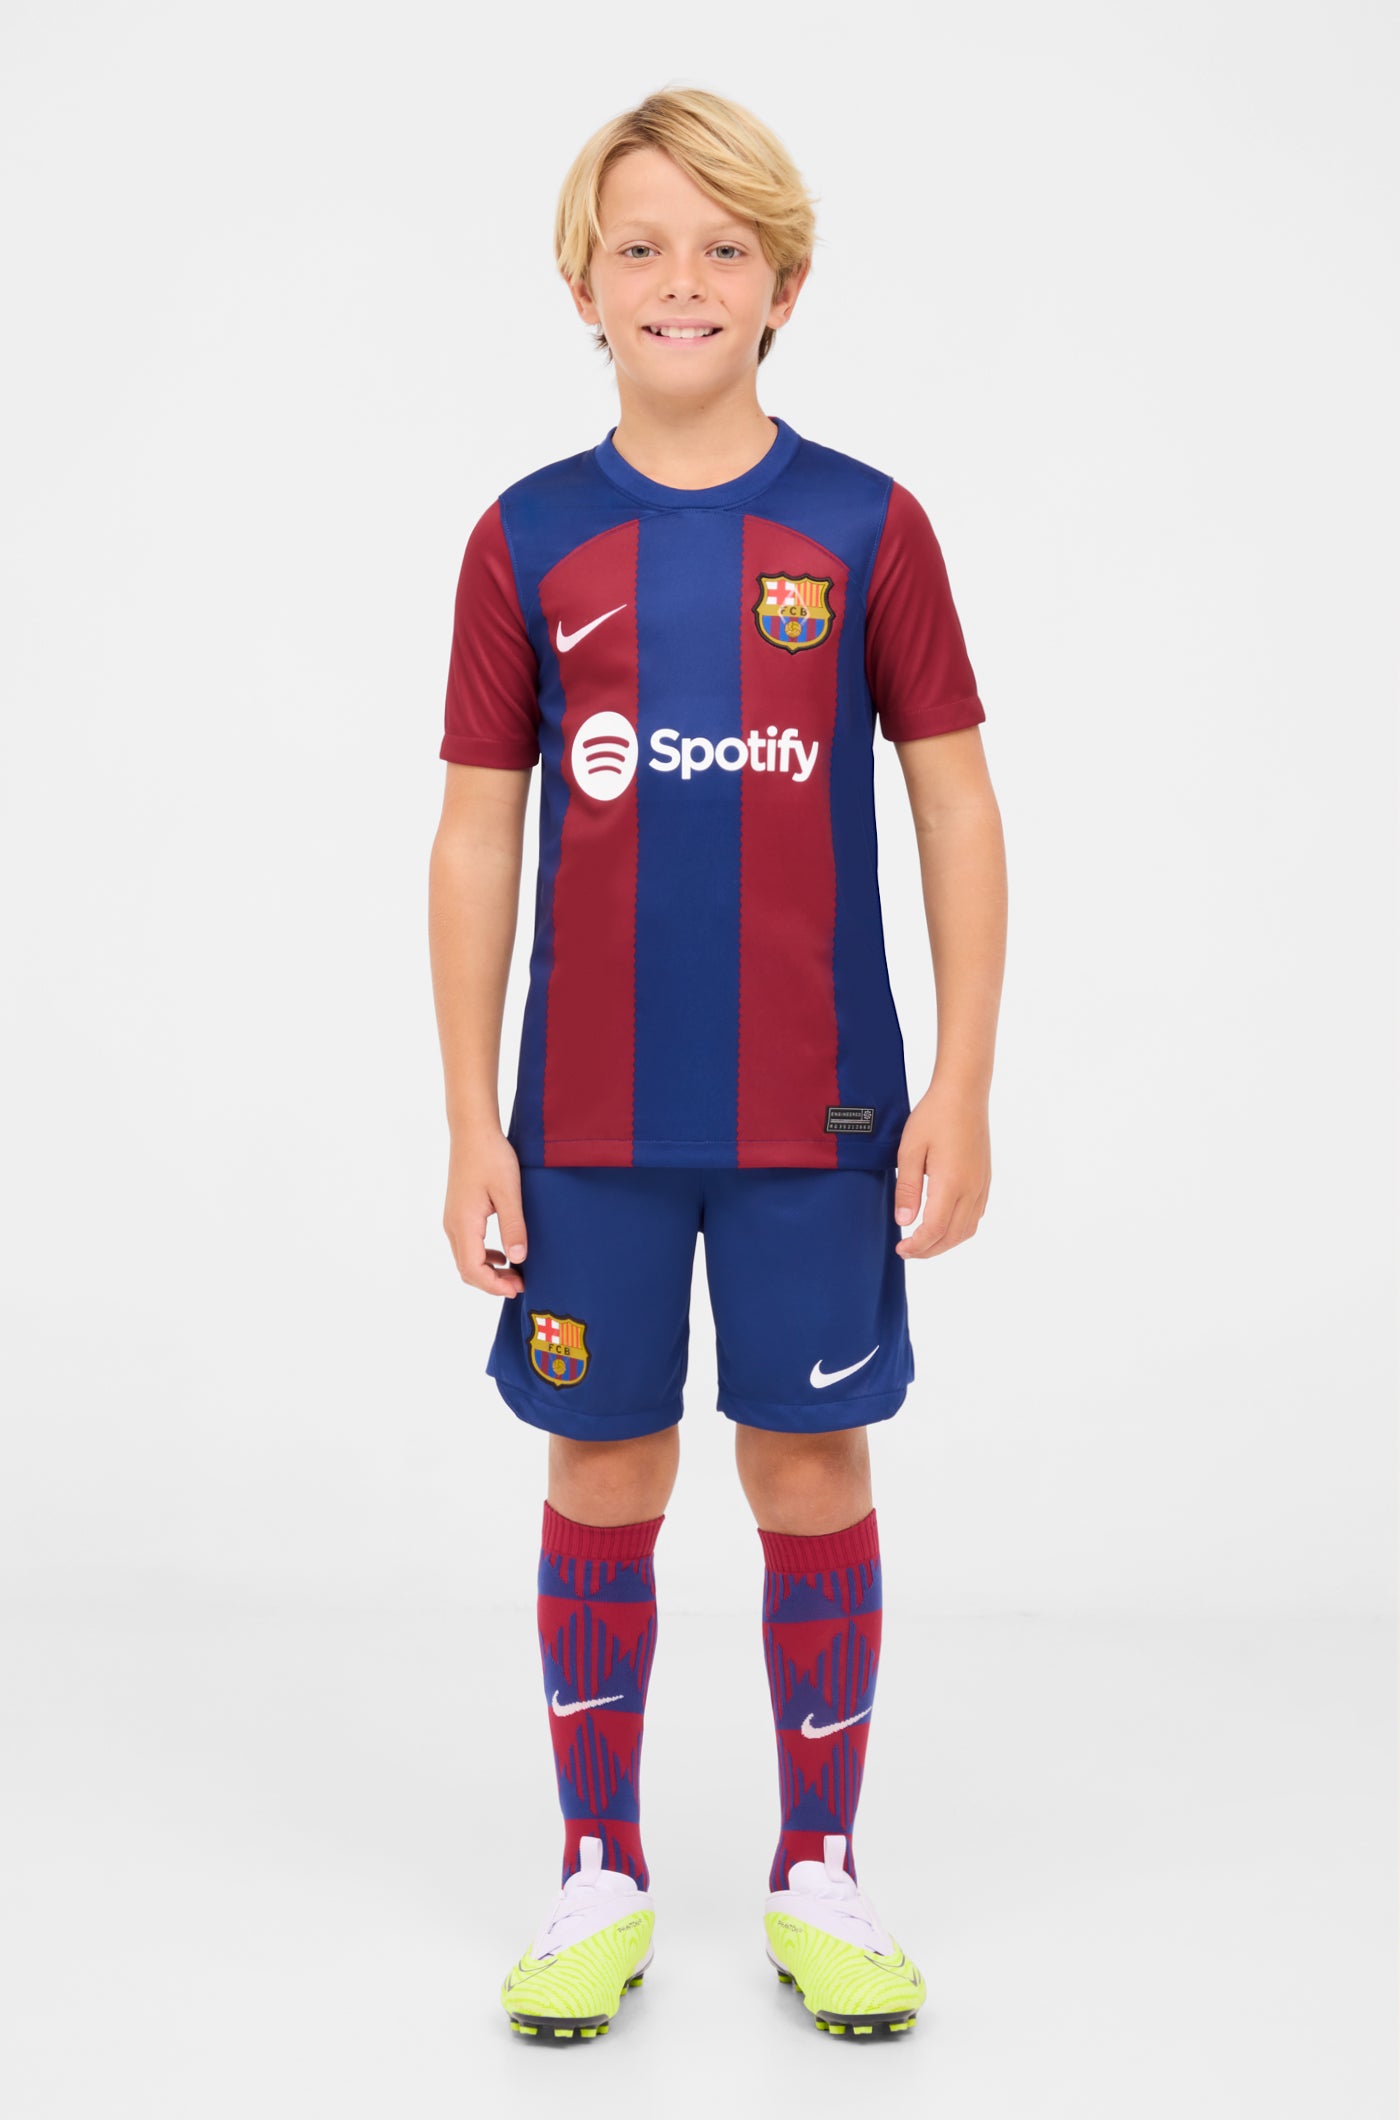 FC Barcelona goalkeeper shirt 23/24 – Barça Official Store Spotify Camp Nou